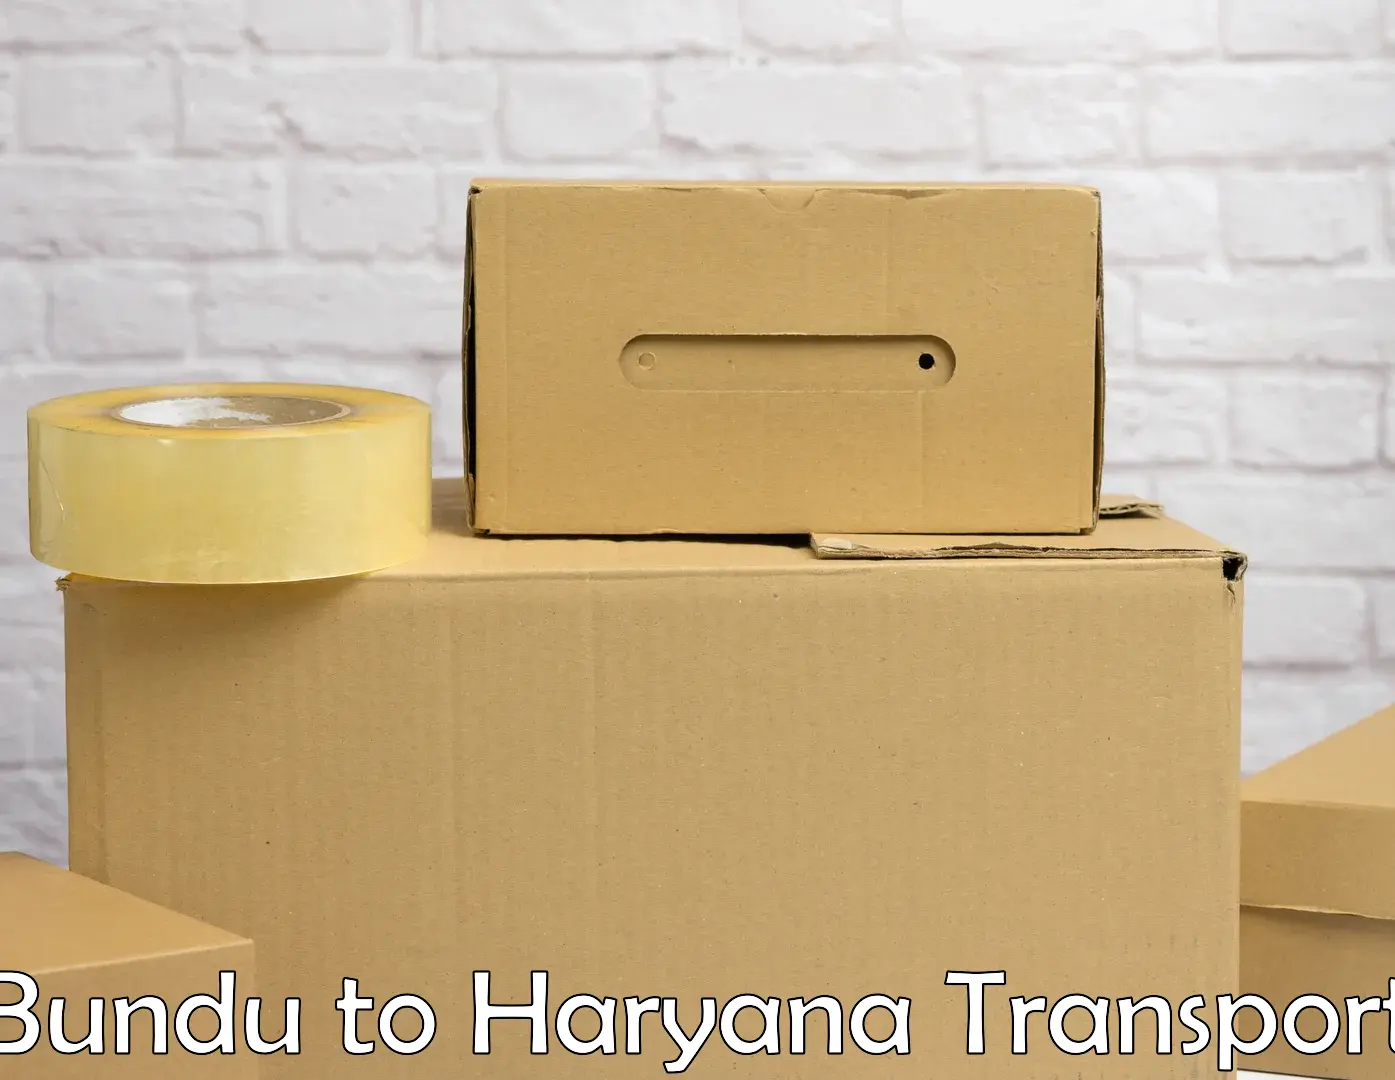 Two wheeler parcel service Bundu to Haryana